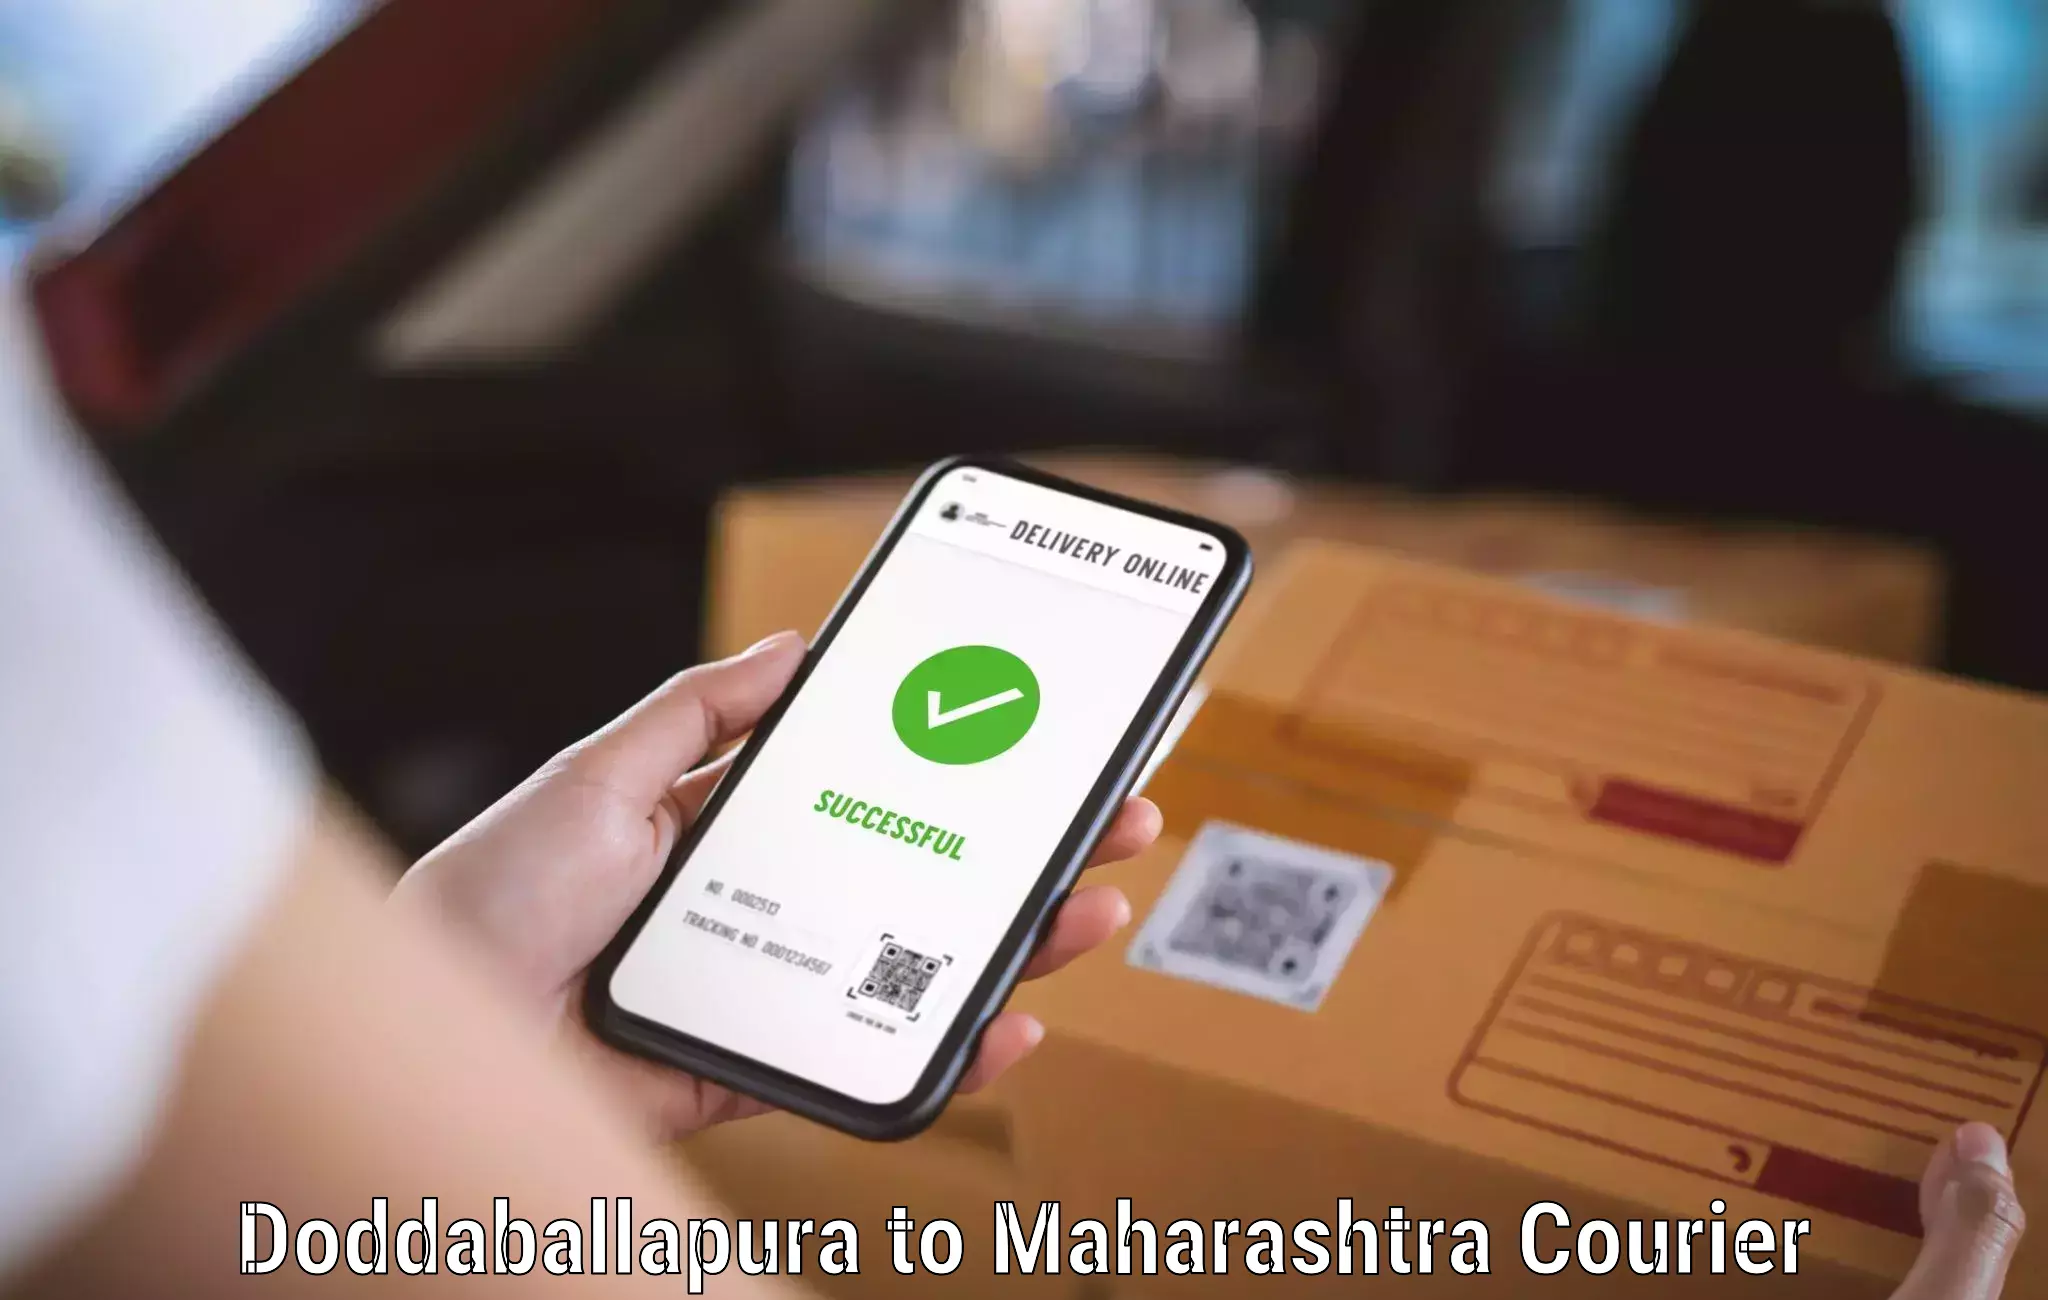 Courier service efficiency in Doddaballapura to Kalyan